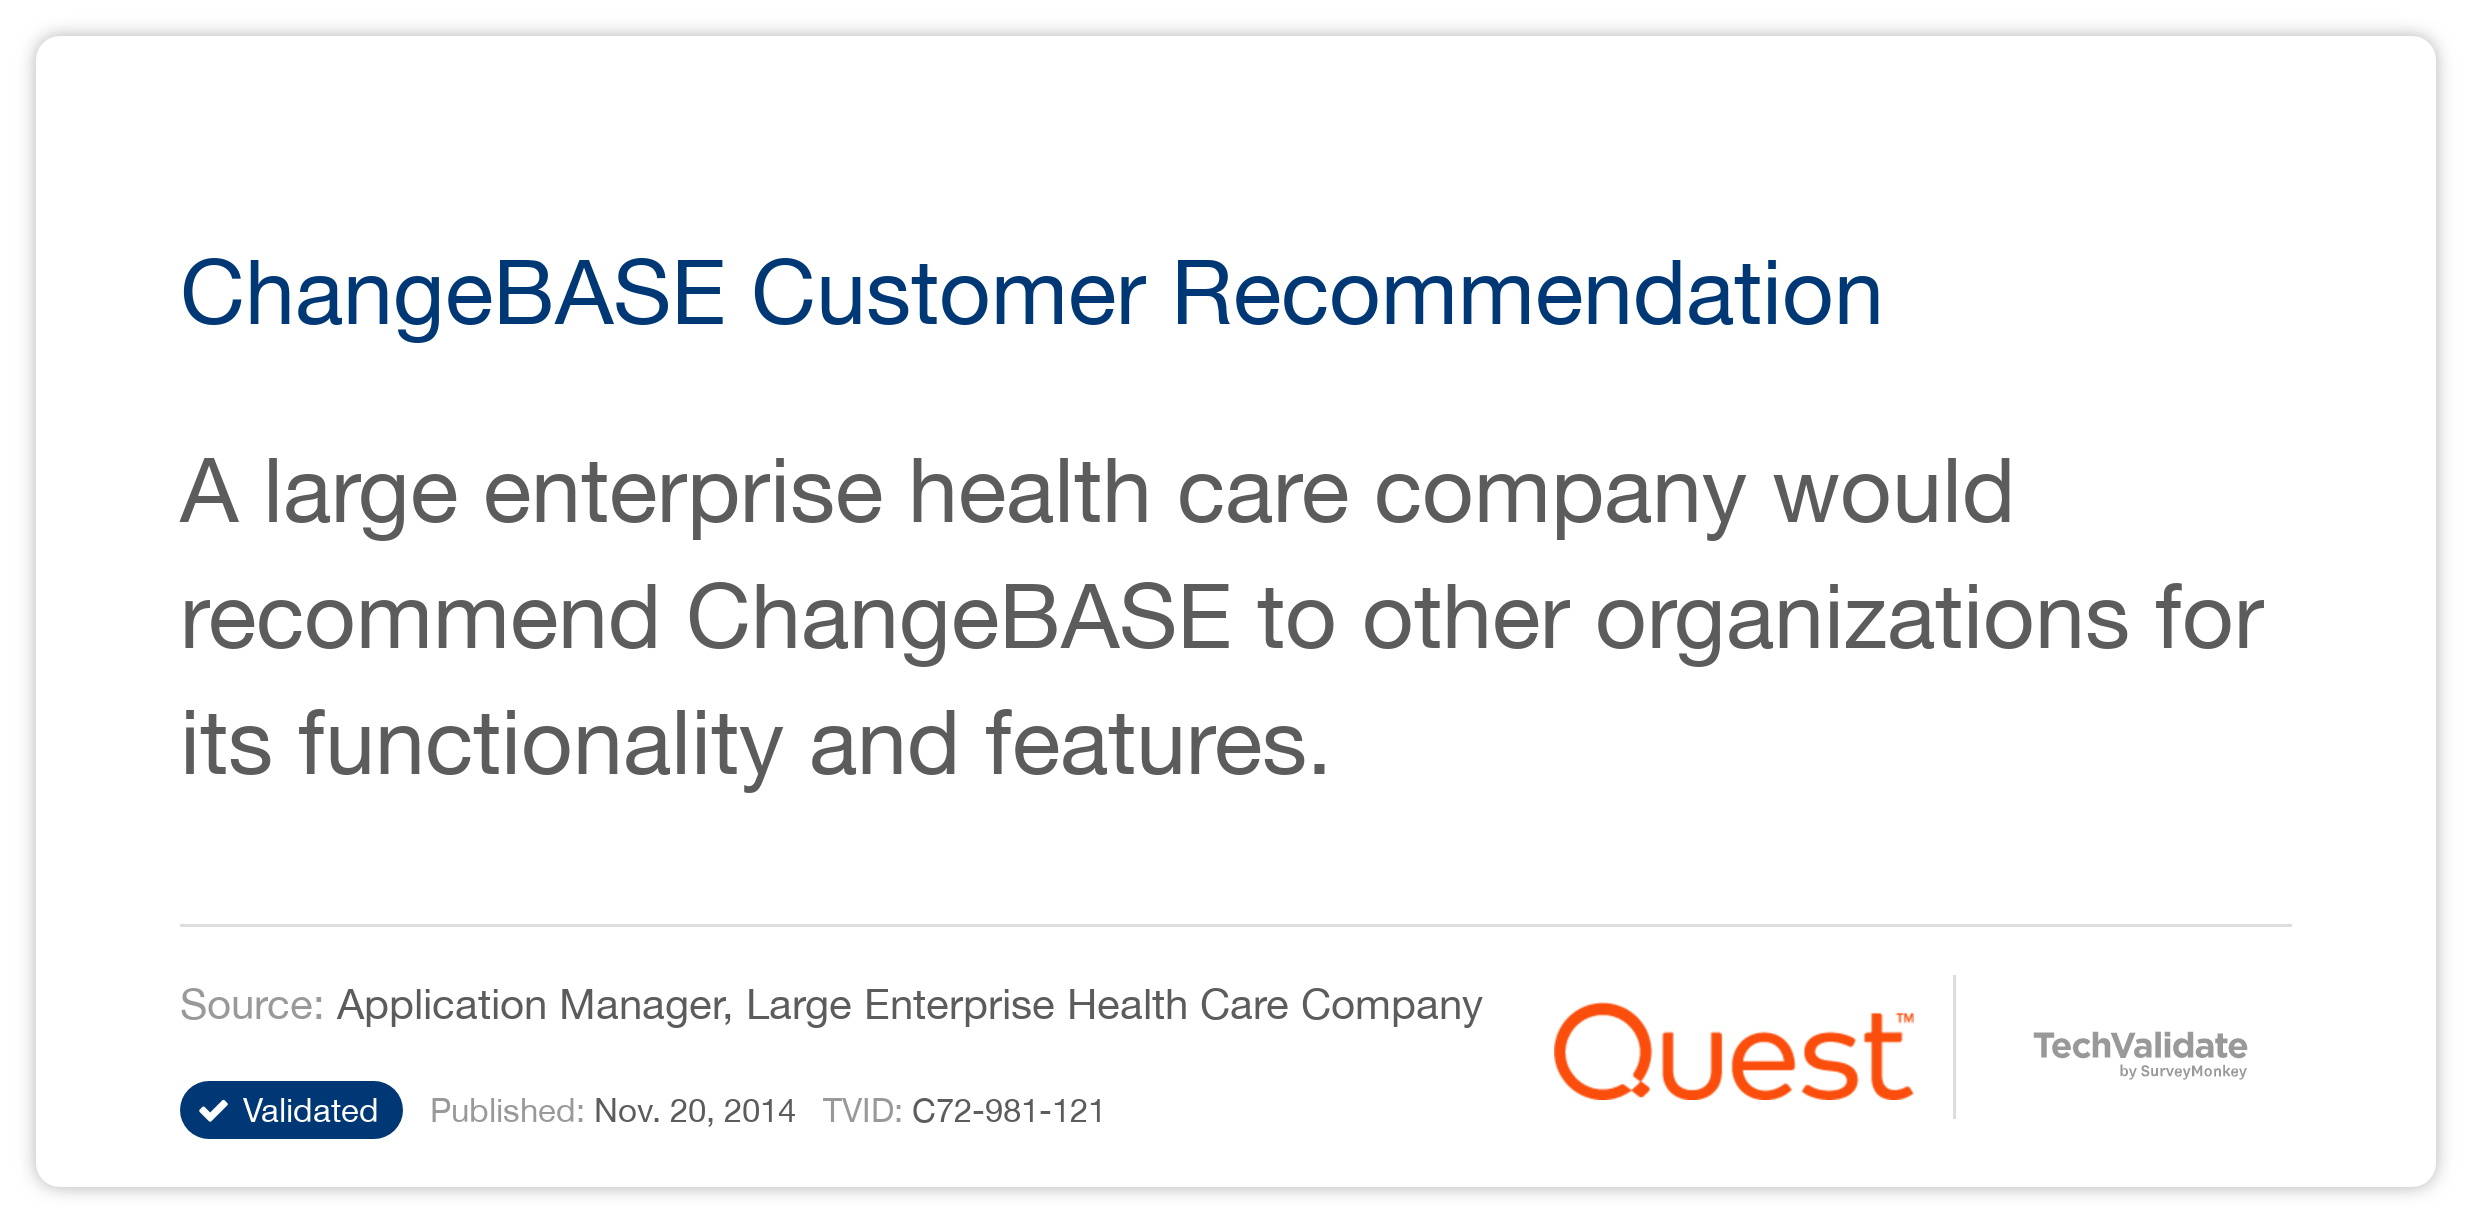 ChangeBASE Customer Recommendation